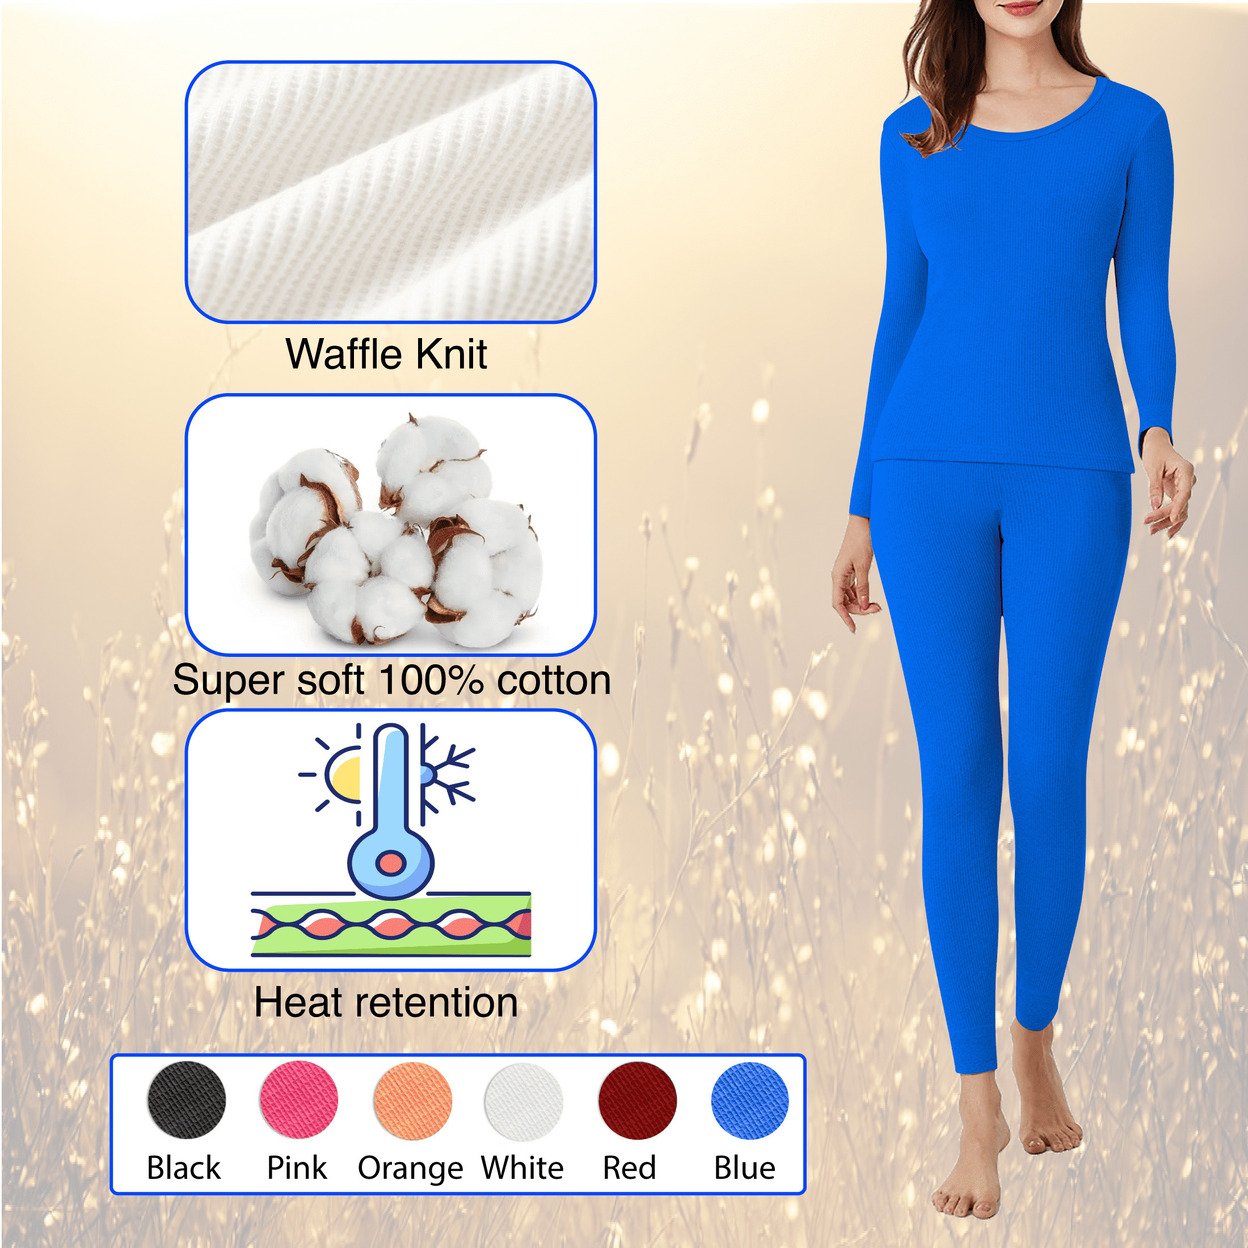 2-Piece: Women's Ultra Soft Cotton Waffle Knit Thermal Sets - Blue, Xx-large